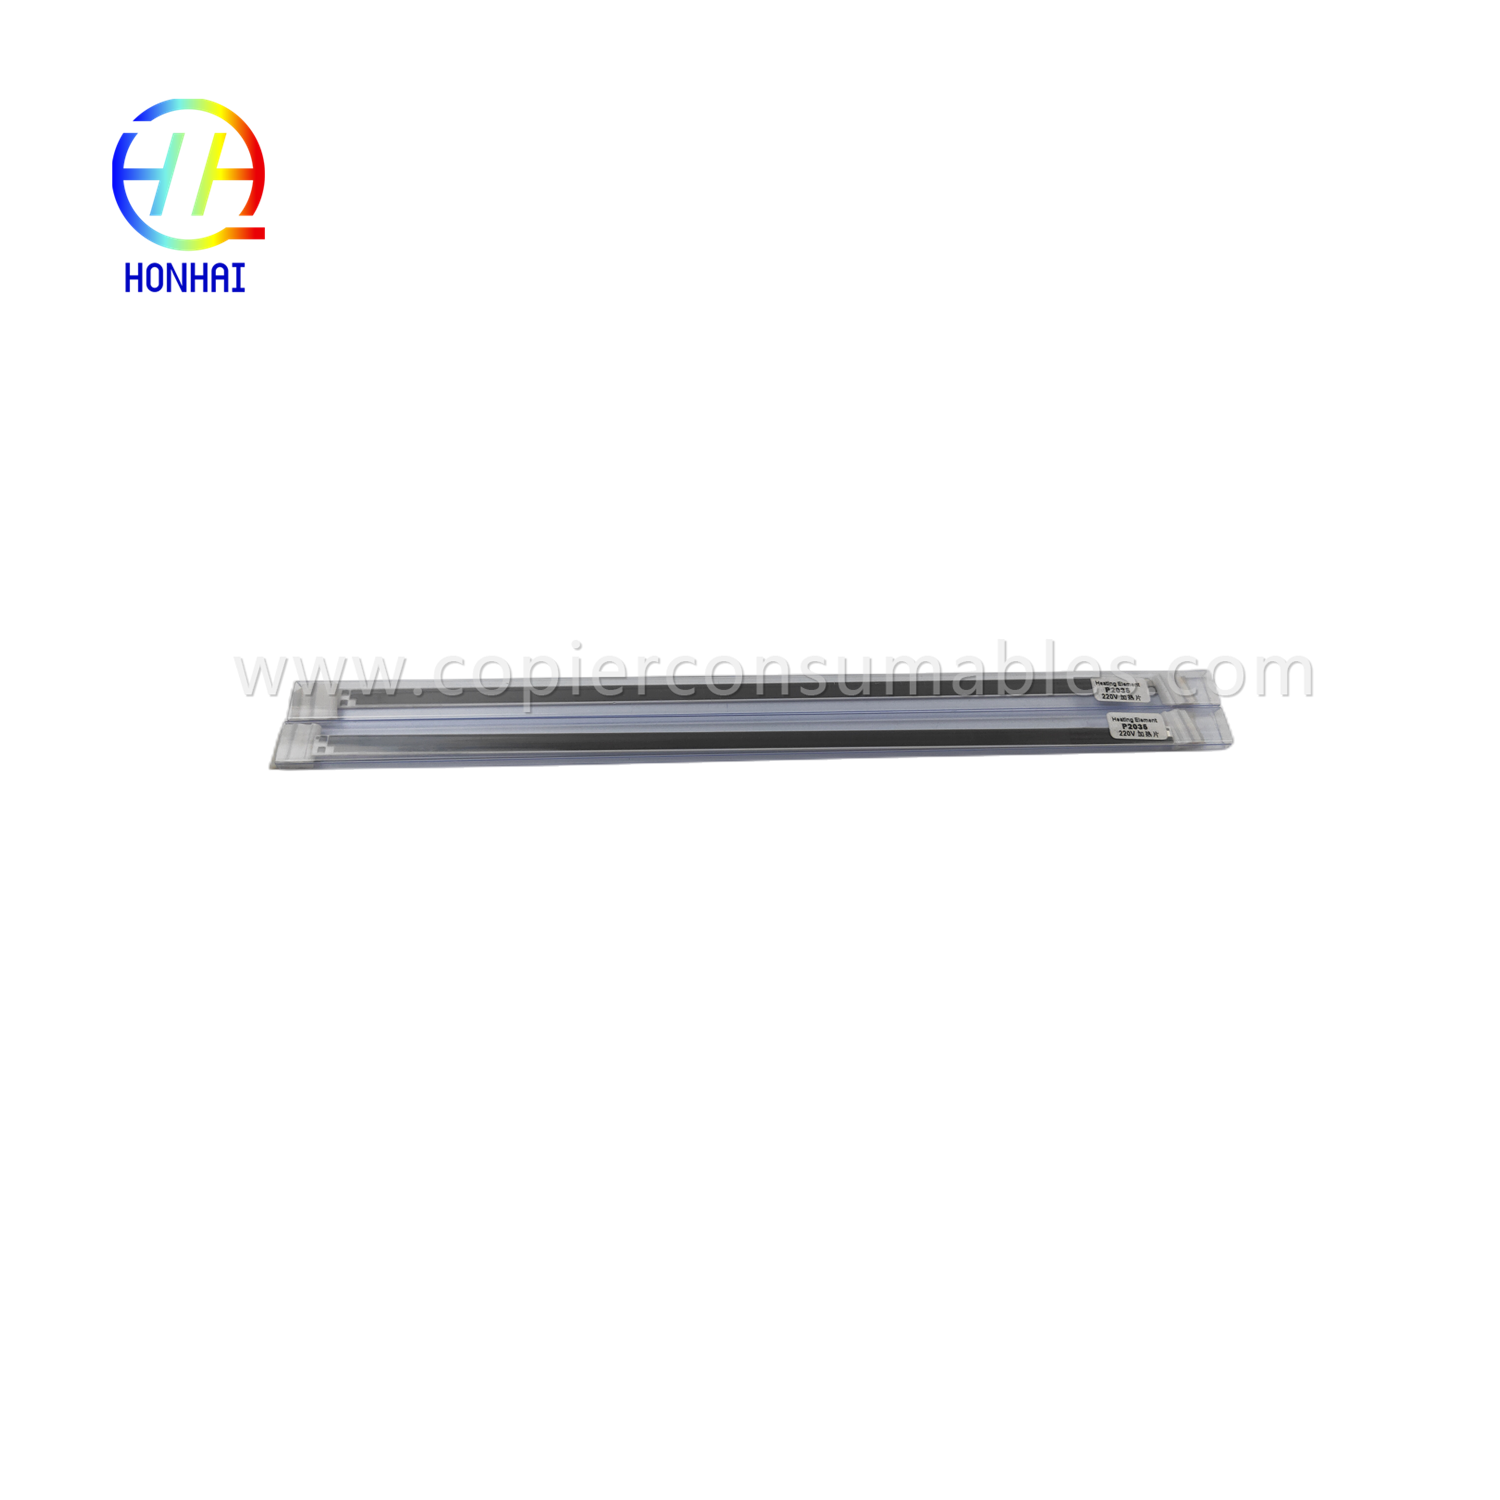 https://www.copierconsumables.com/heating-element-220v-oem-for-hp-laserjet-p2035-p2055-rm1-6406-heat-product/